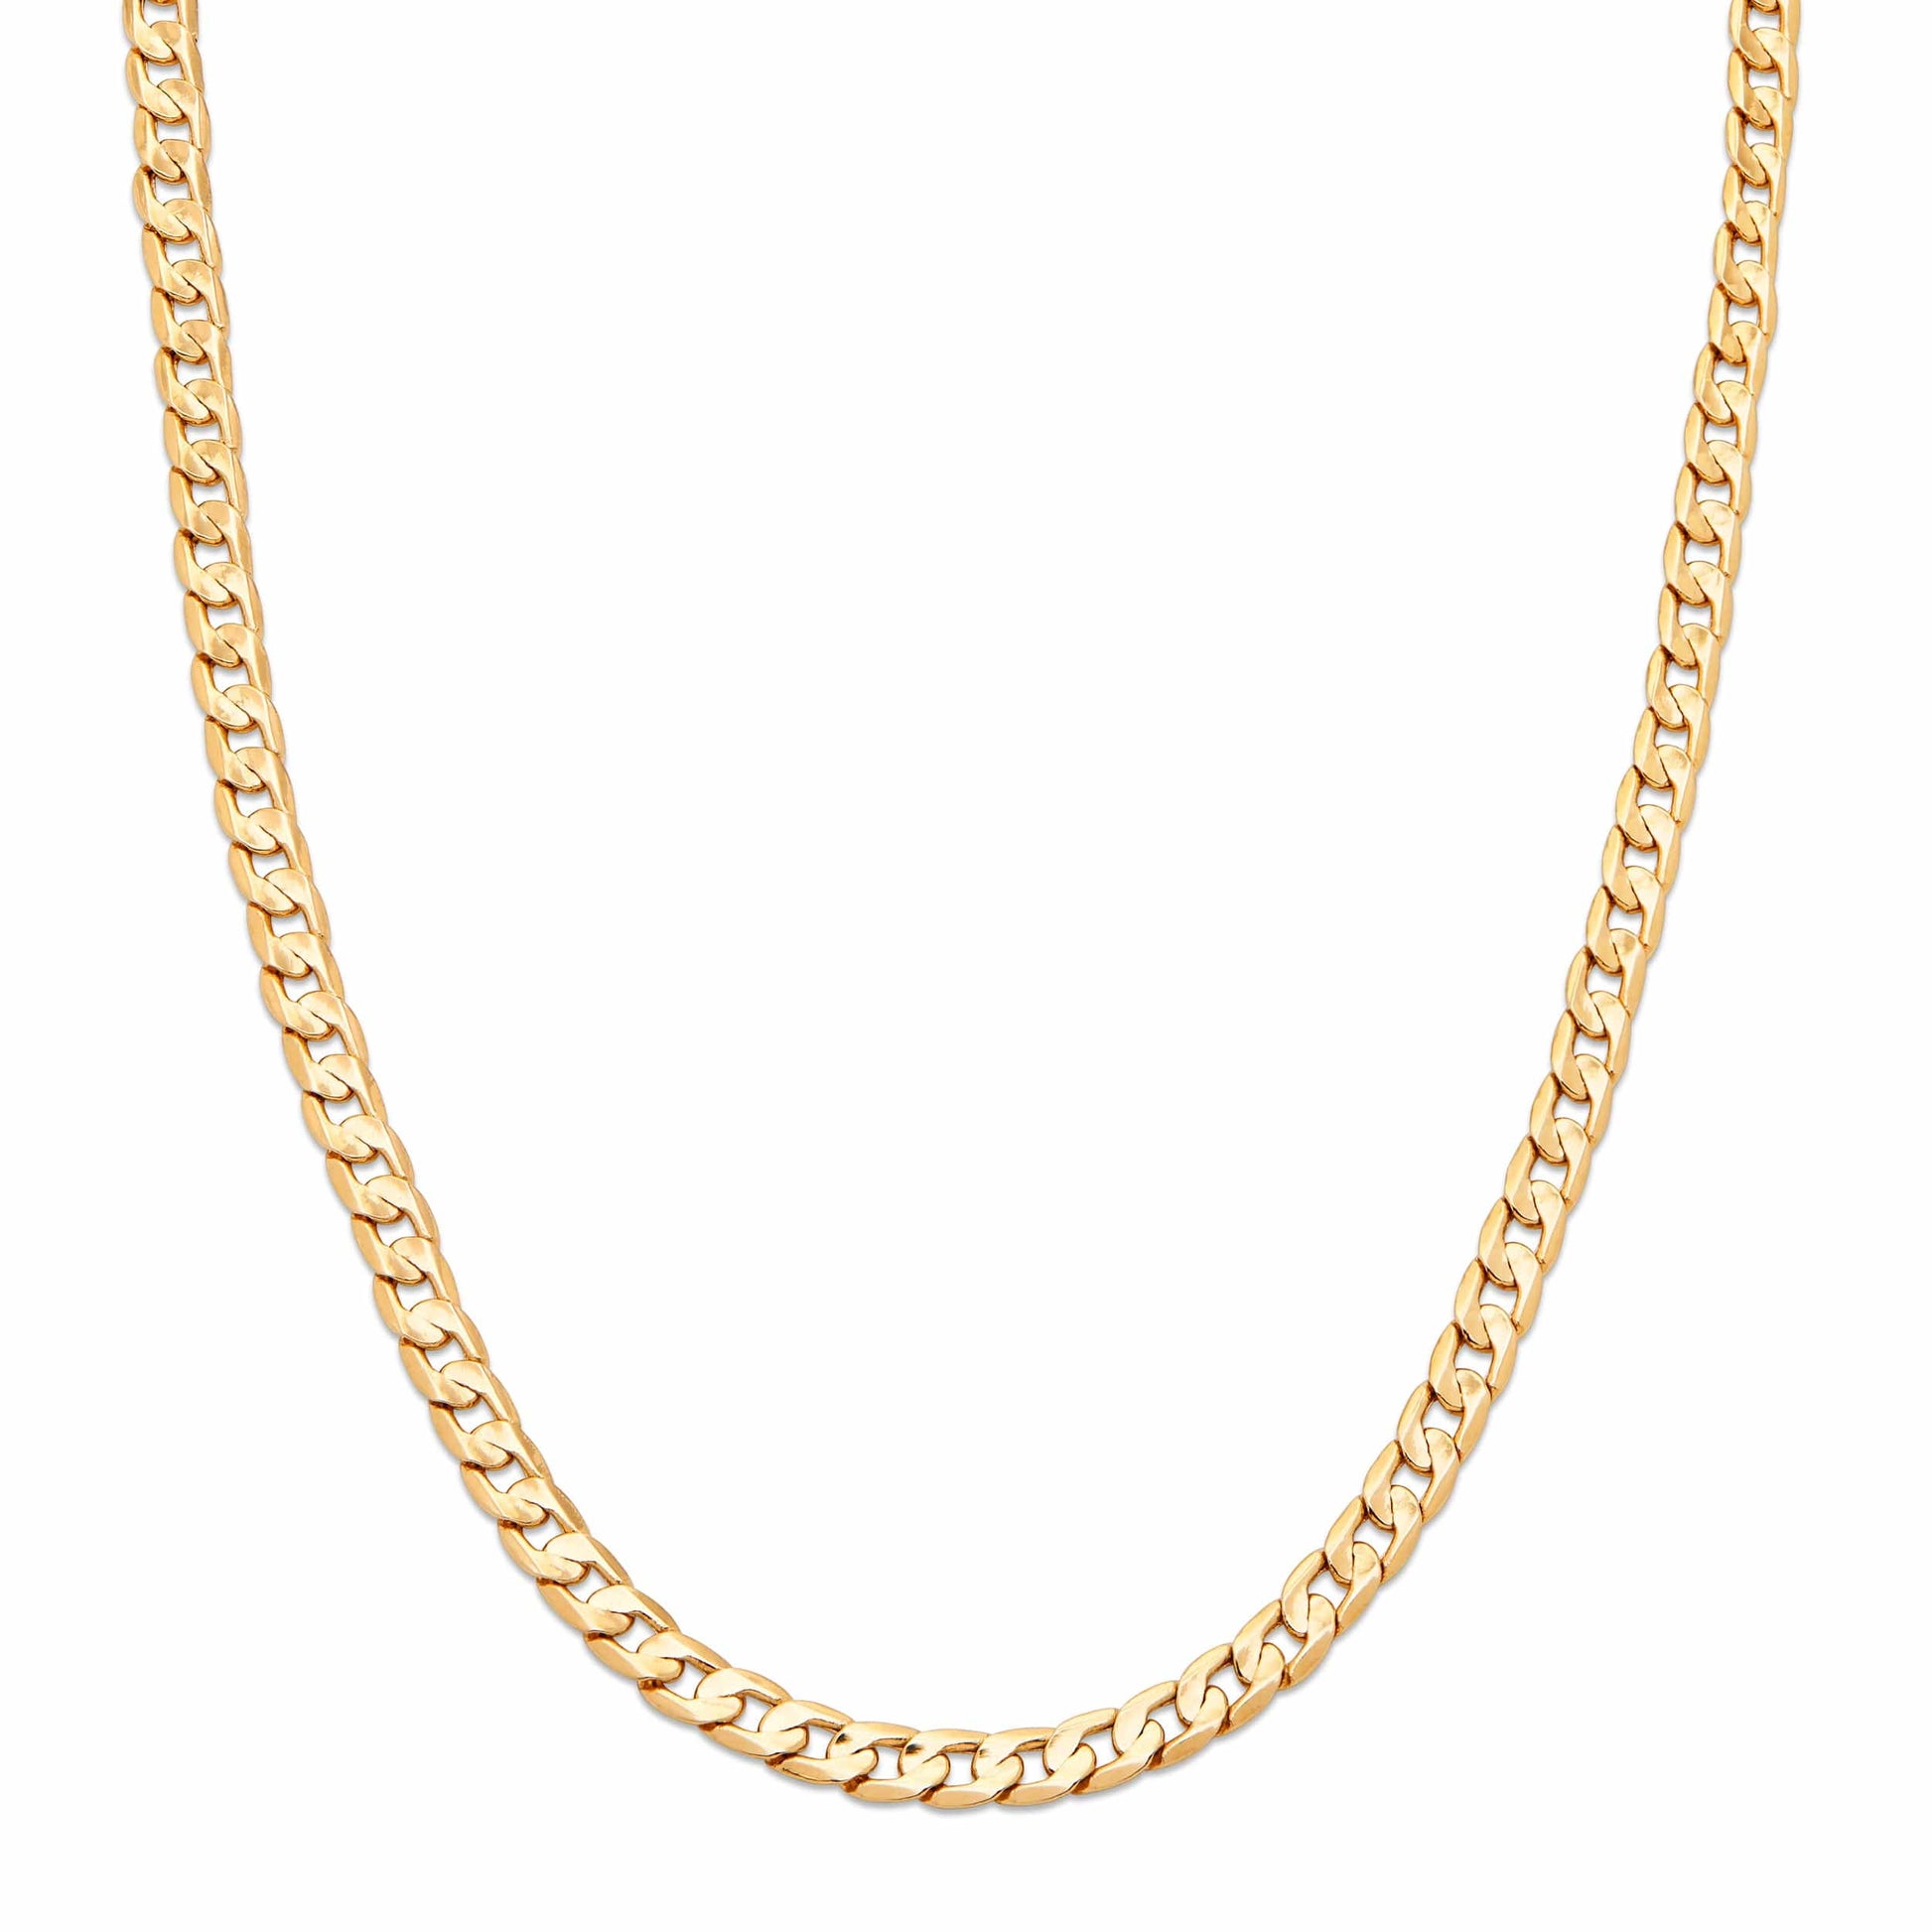 MONDO CATTOLICO Jewelry Cm 60 (23.6 in) Yellow Gold Curb Chain